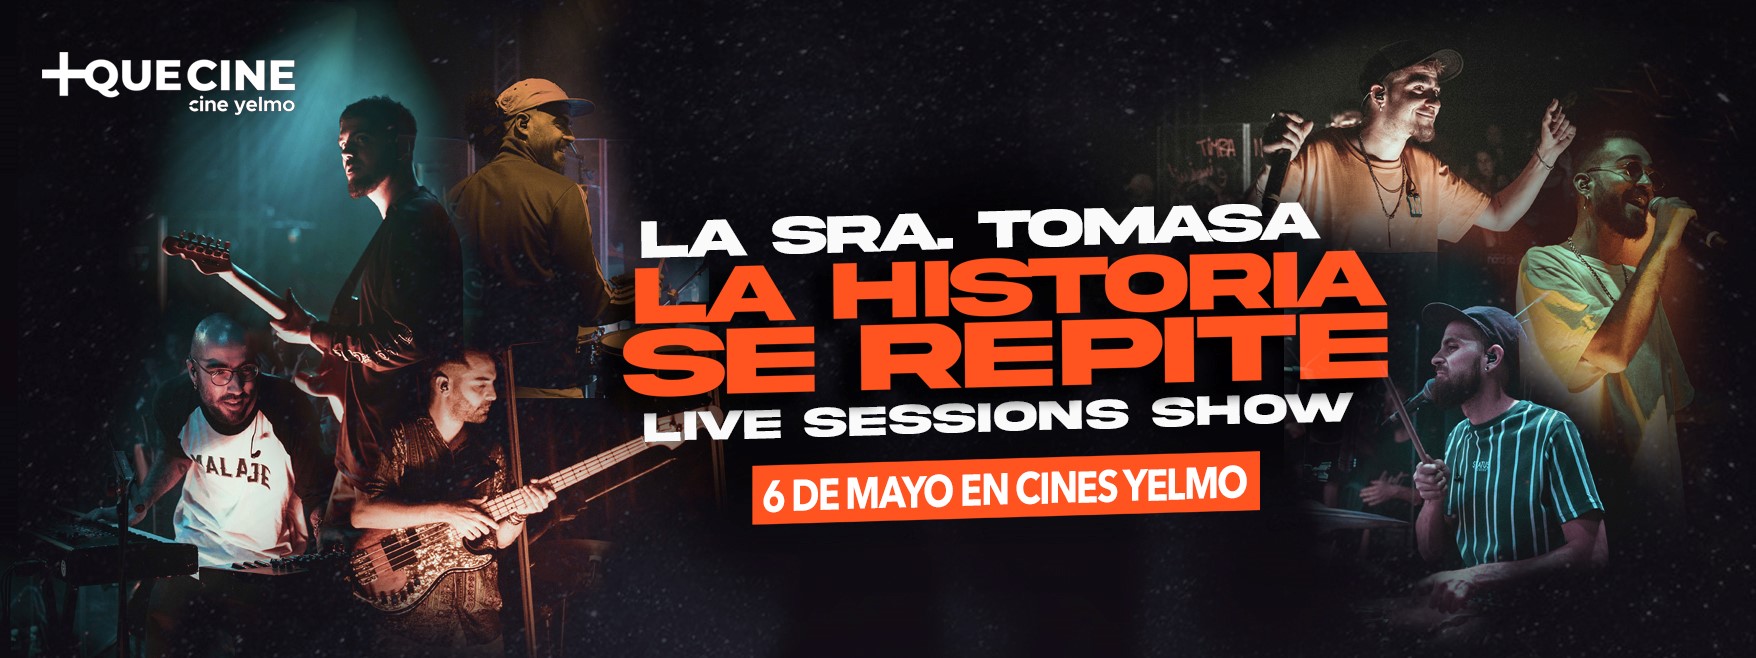 La Sra. Tomasa llega a los cines con ‘La Historia Se Repite: Live Sessions Show’ a partir del 6 de mayo